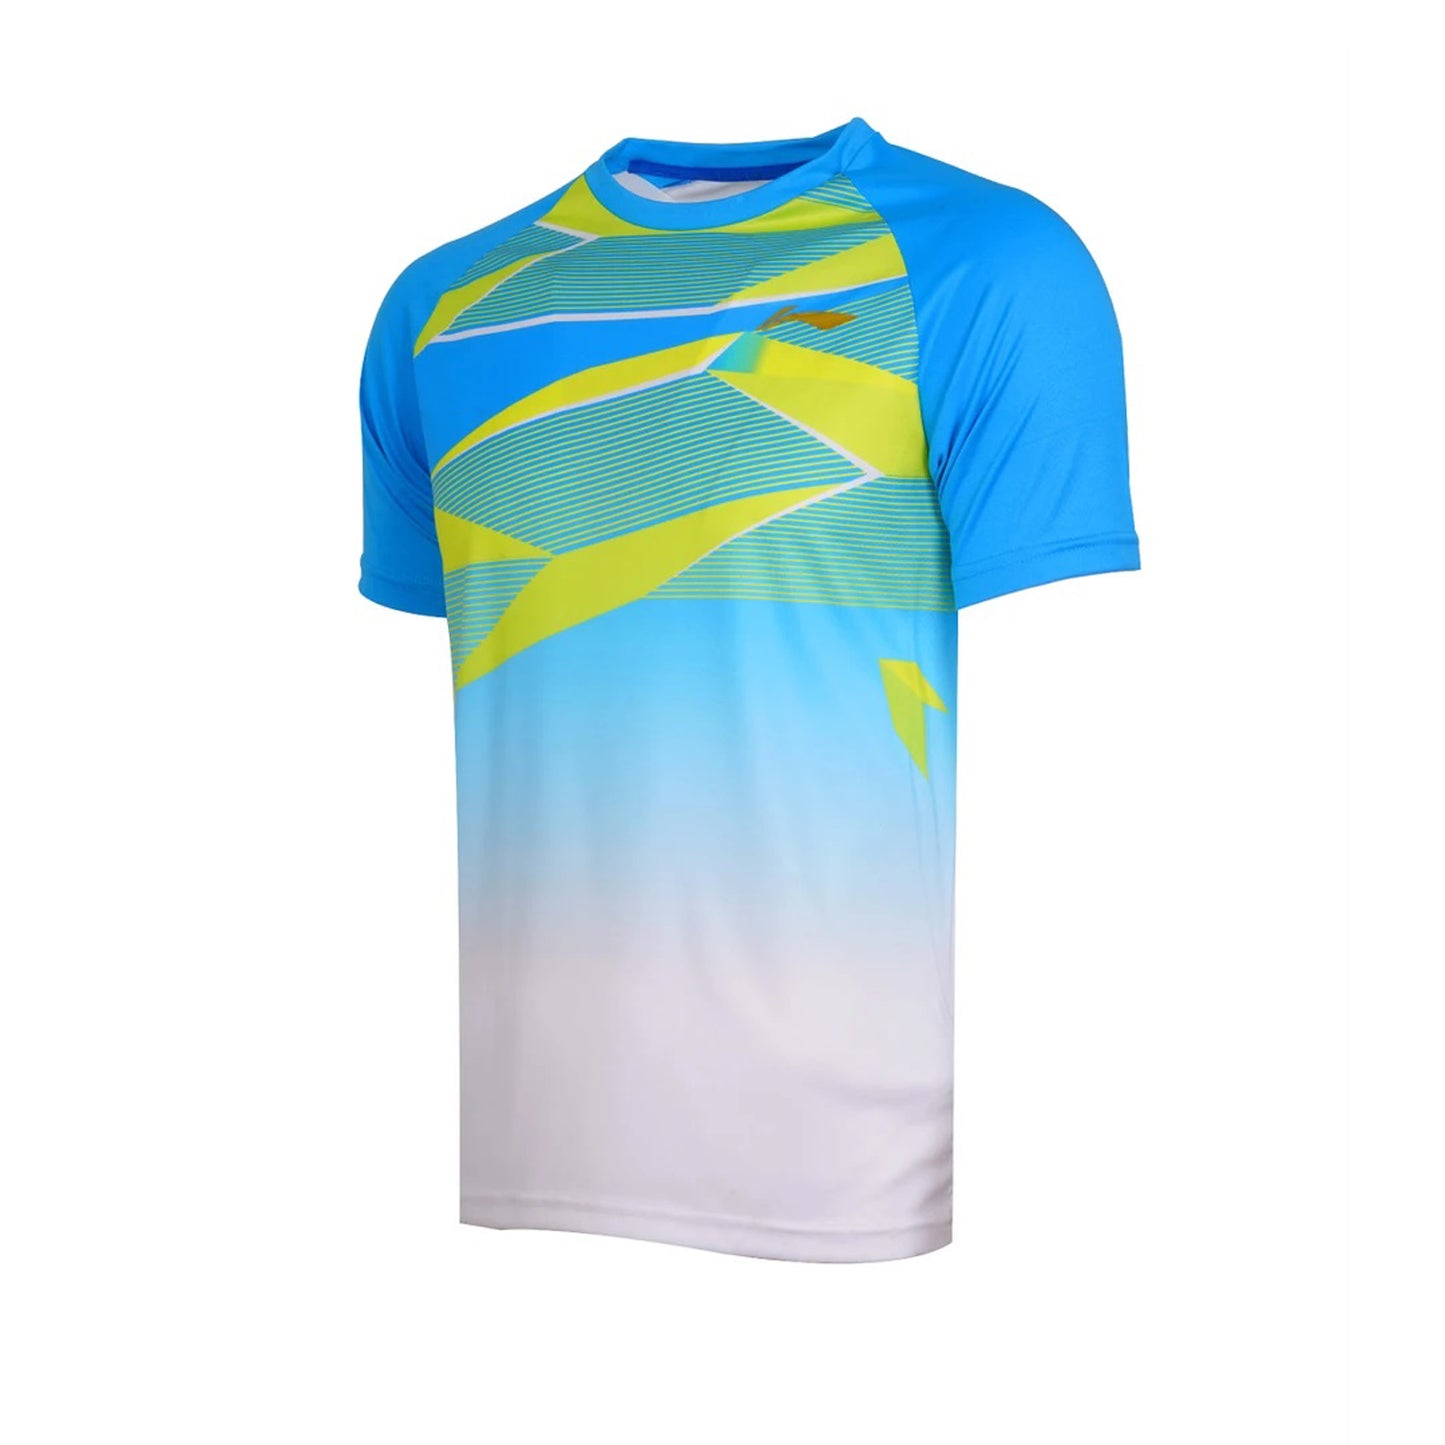 Li-Ning ATSR685 Round Neck Badminton Tshirt - Best Price online Prokicksports.com